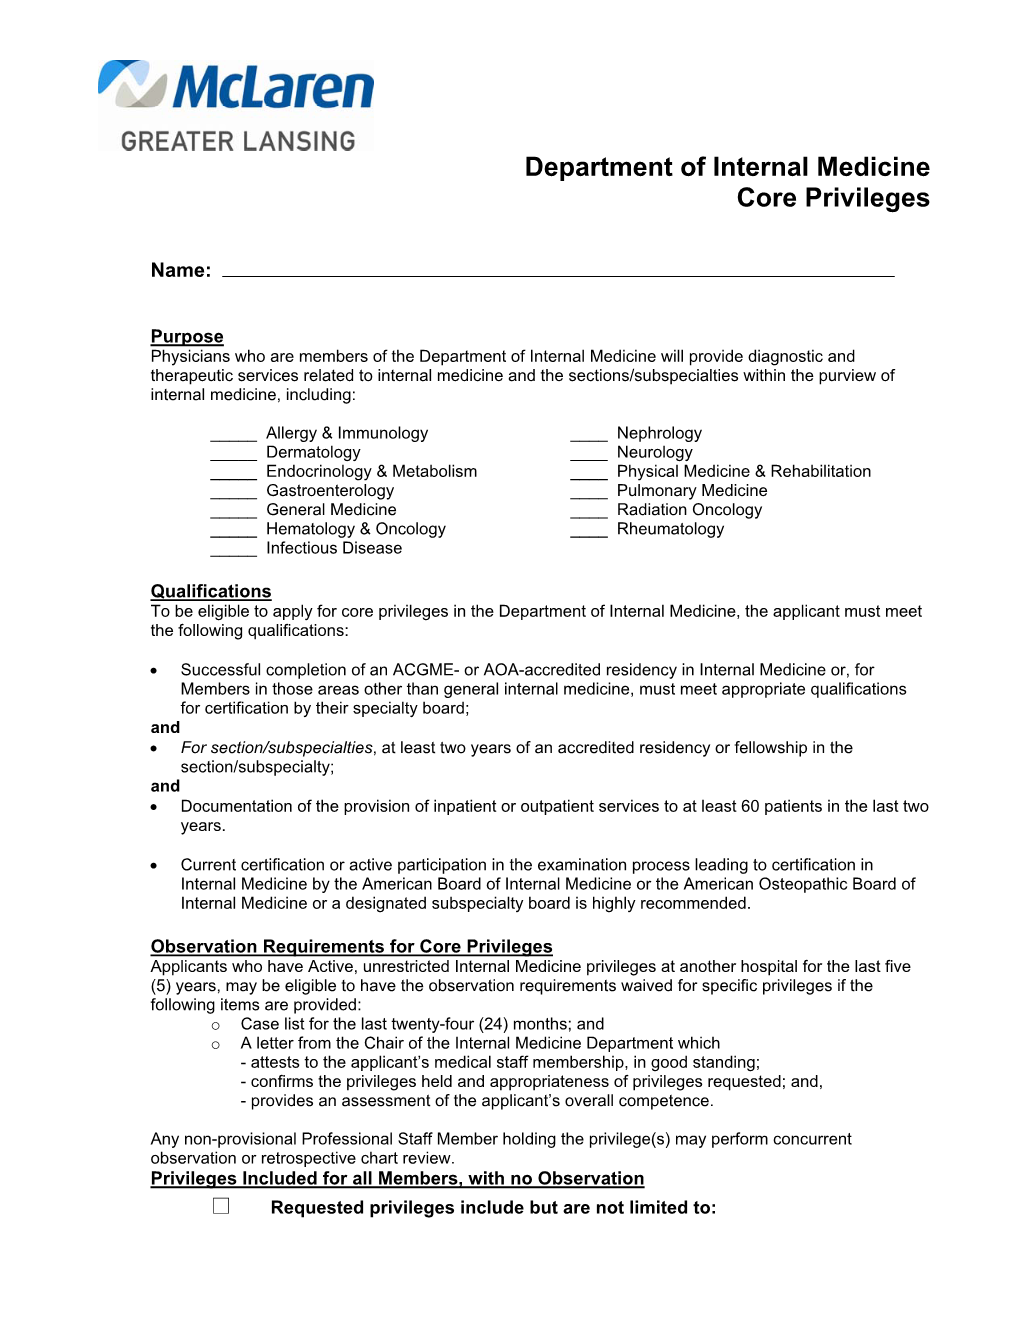 Department of Internal Medicine Core Privileges